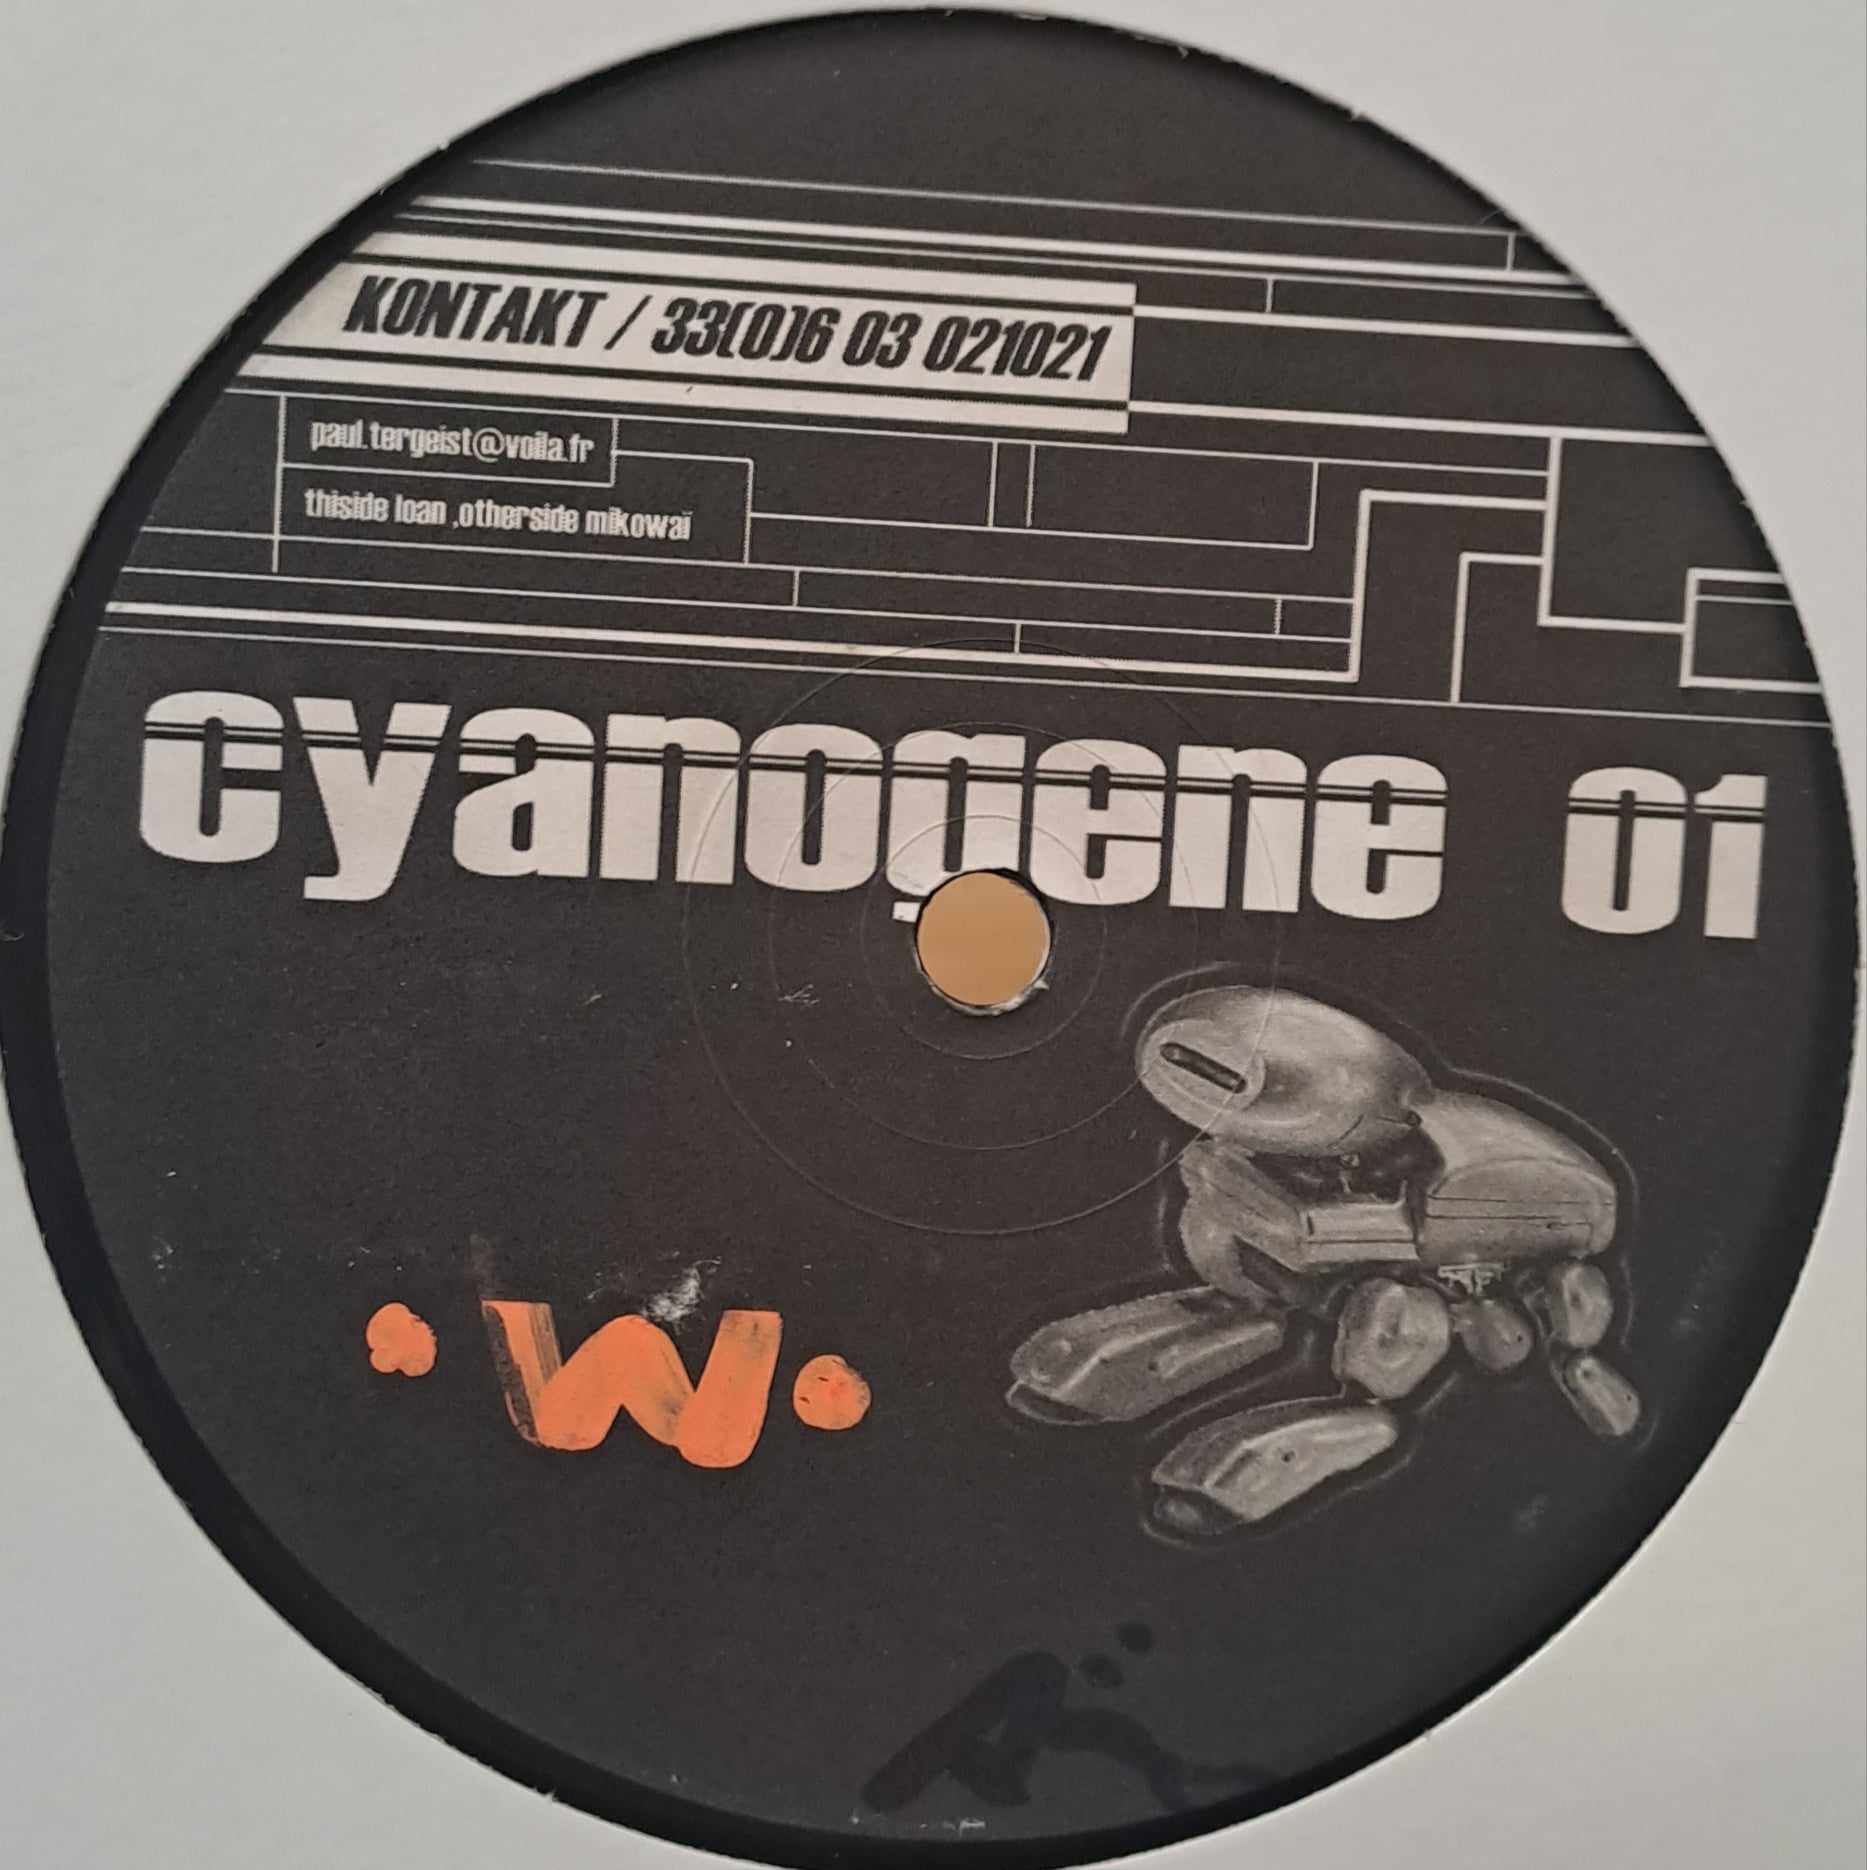 Cyanogene 01 - vinyle freetekno